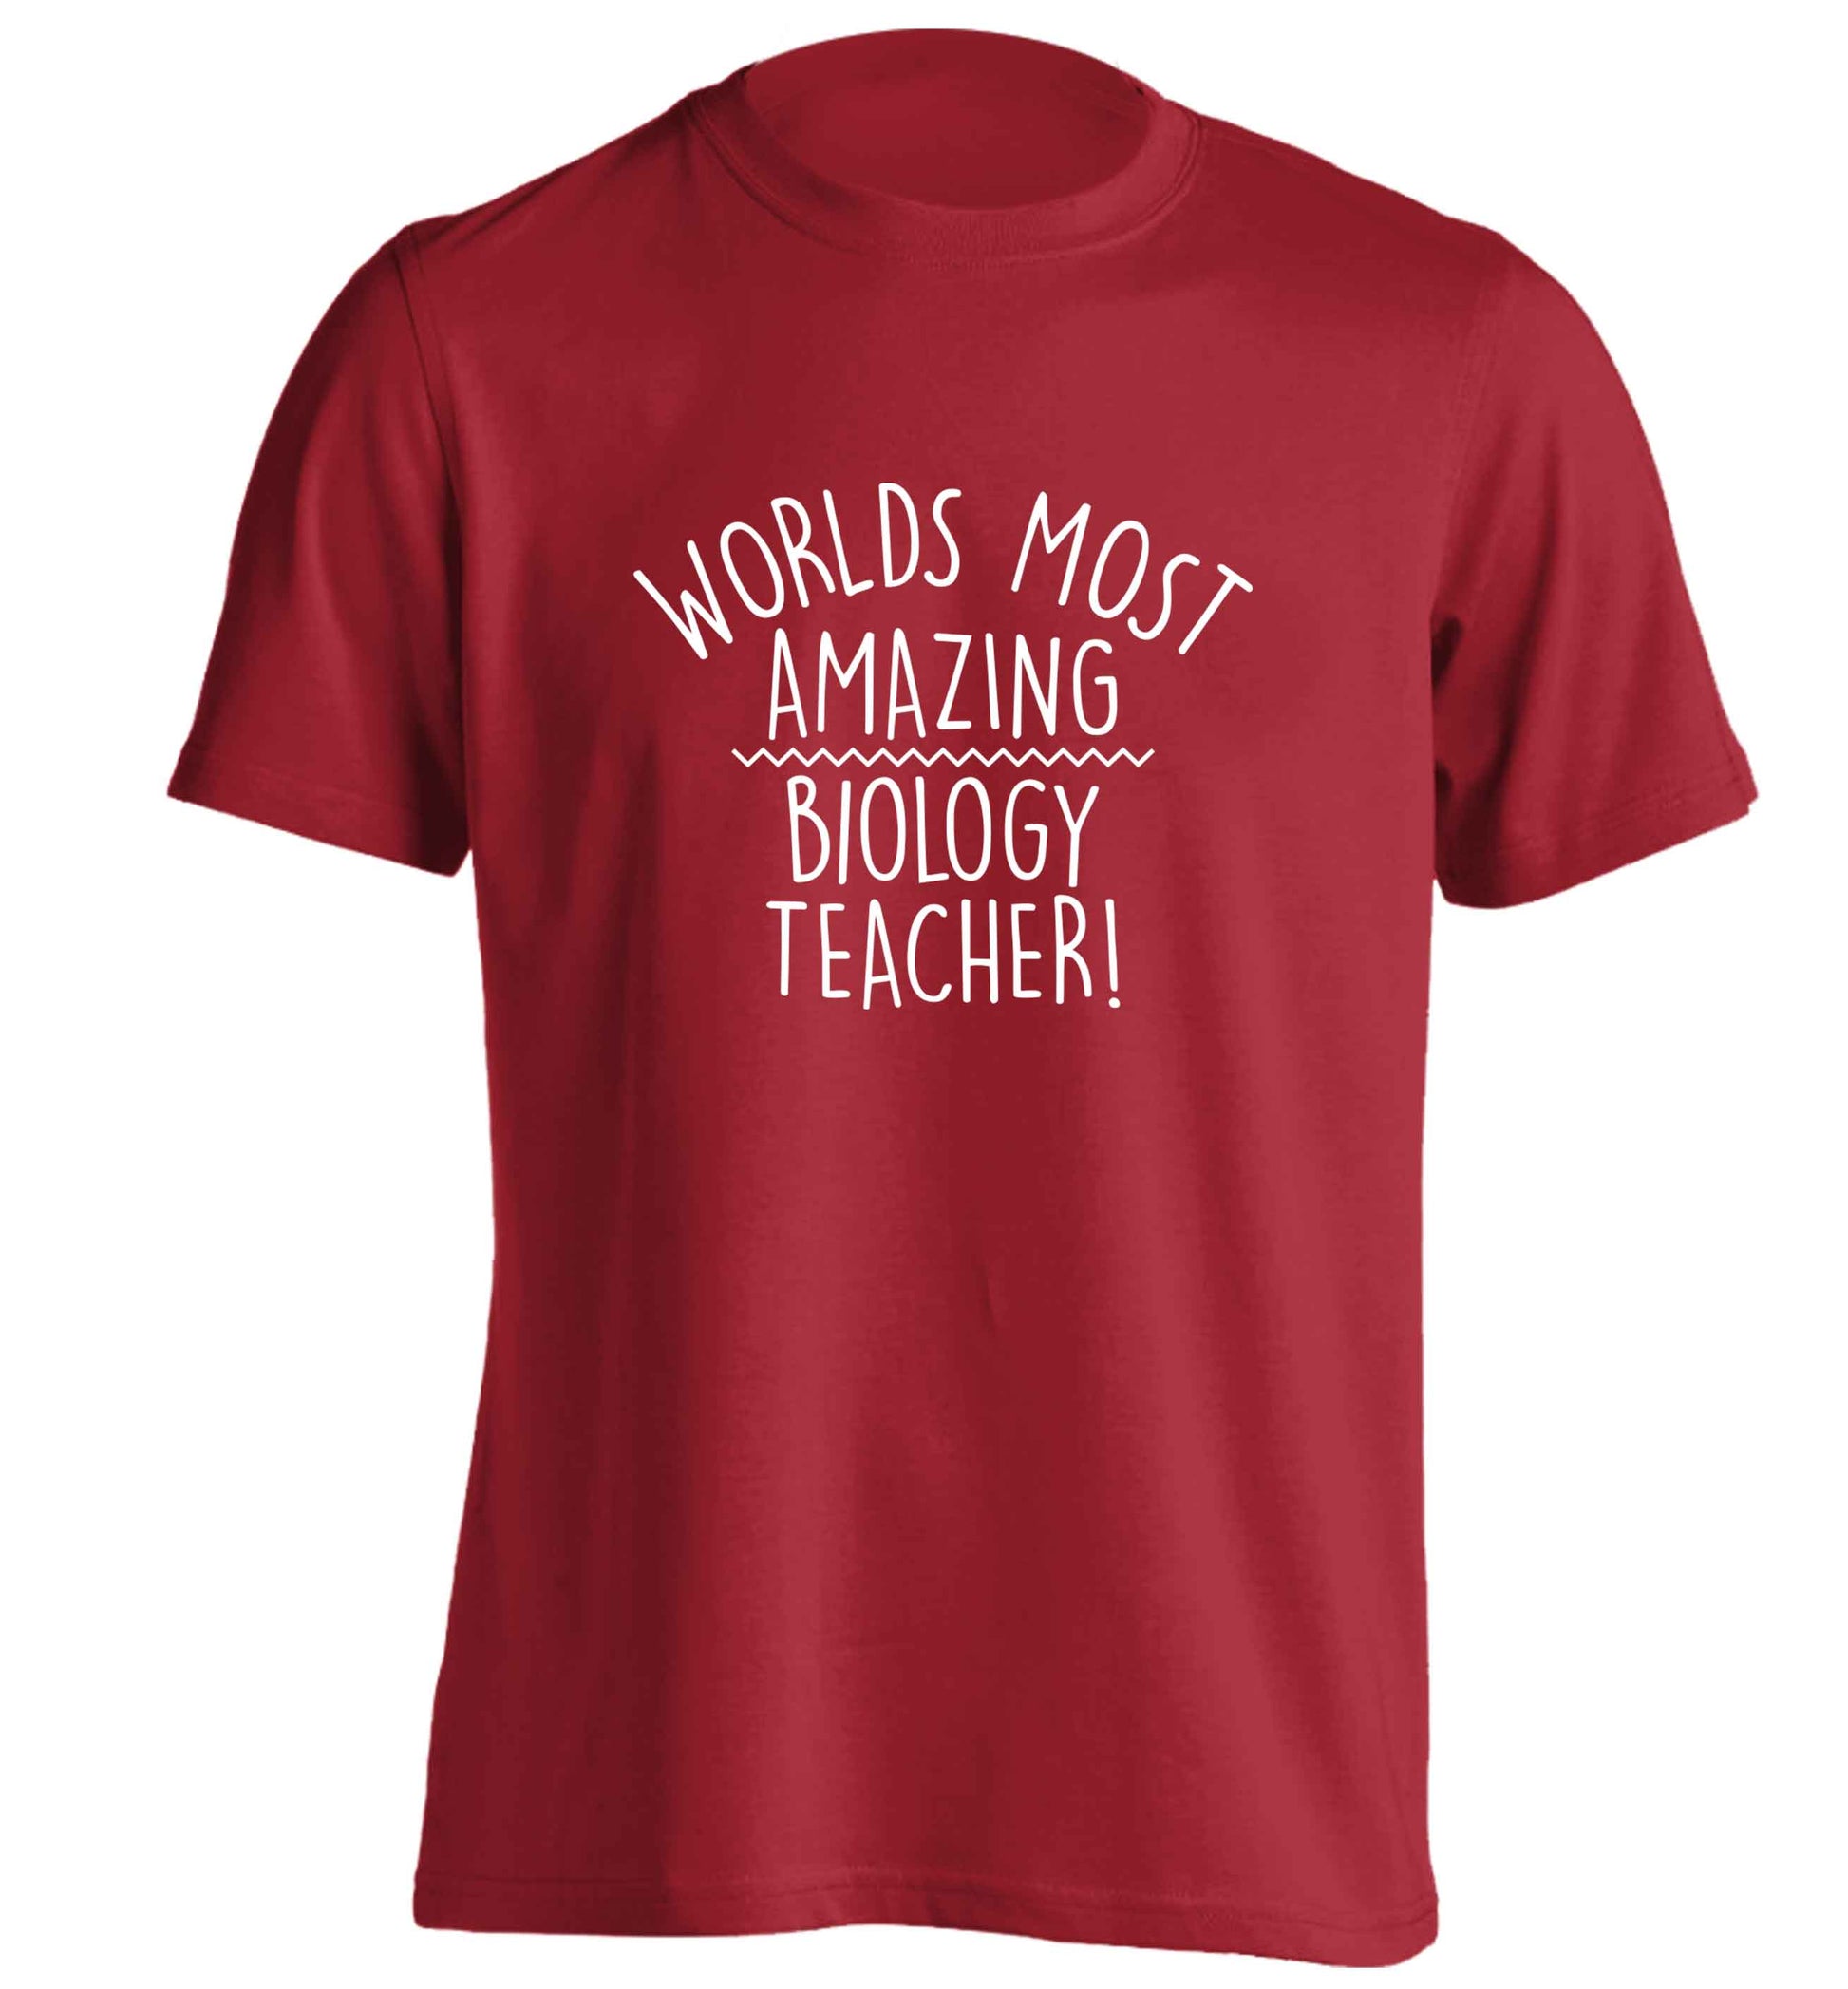 Worlds most amazing biology teacher adults unisex red Tshirt 2XL